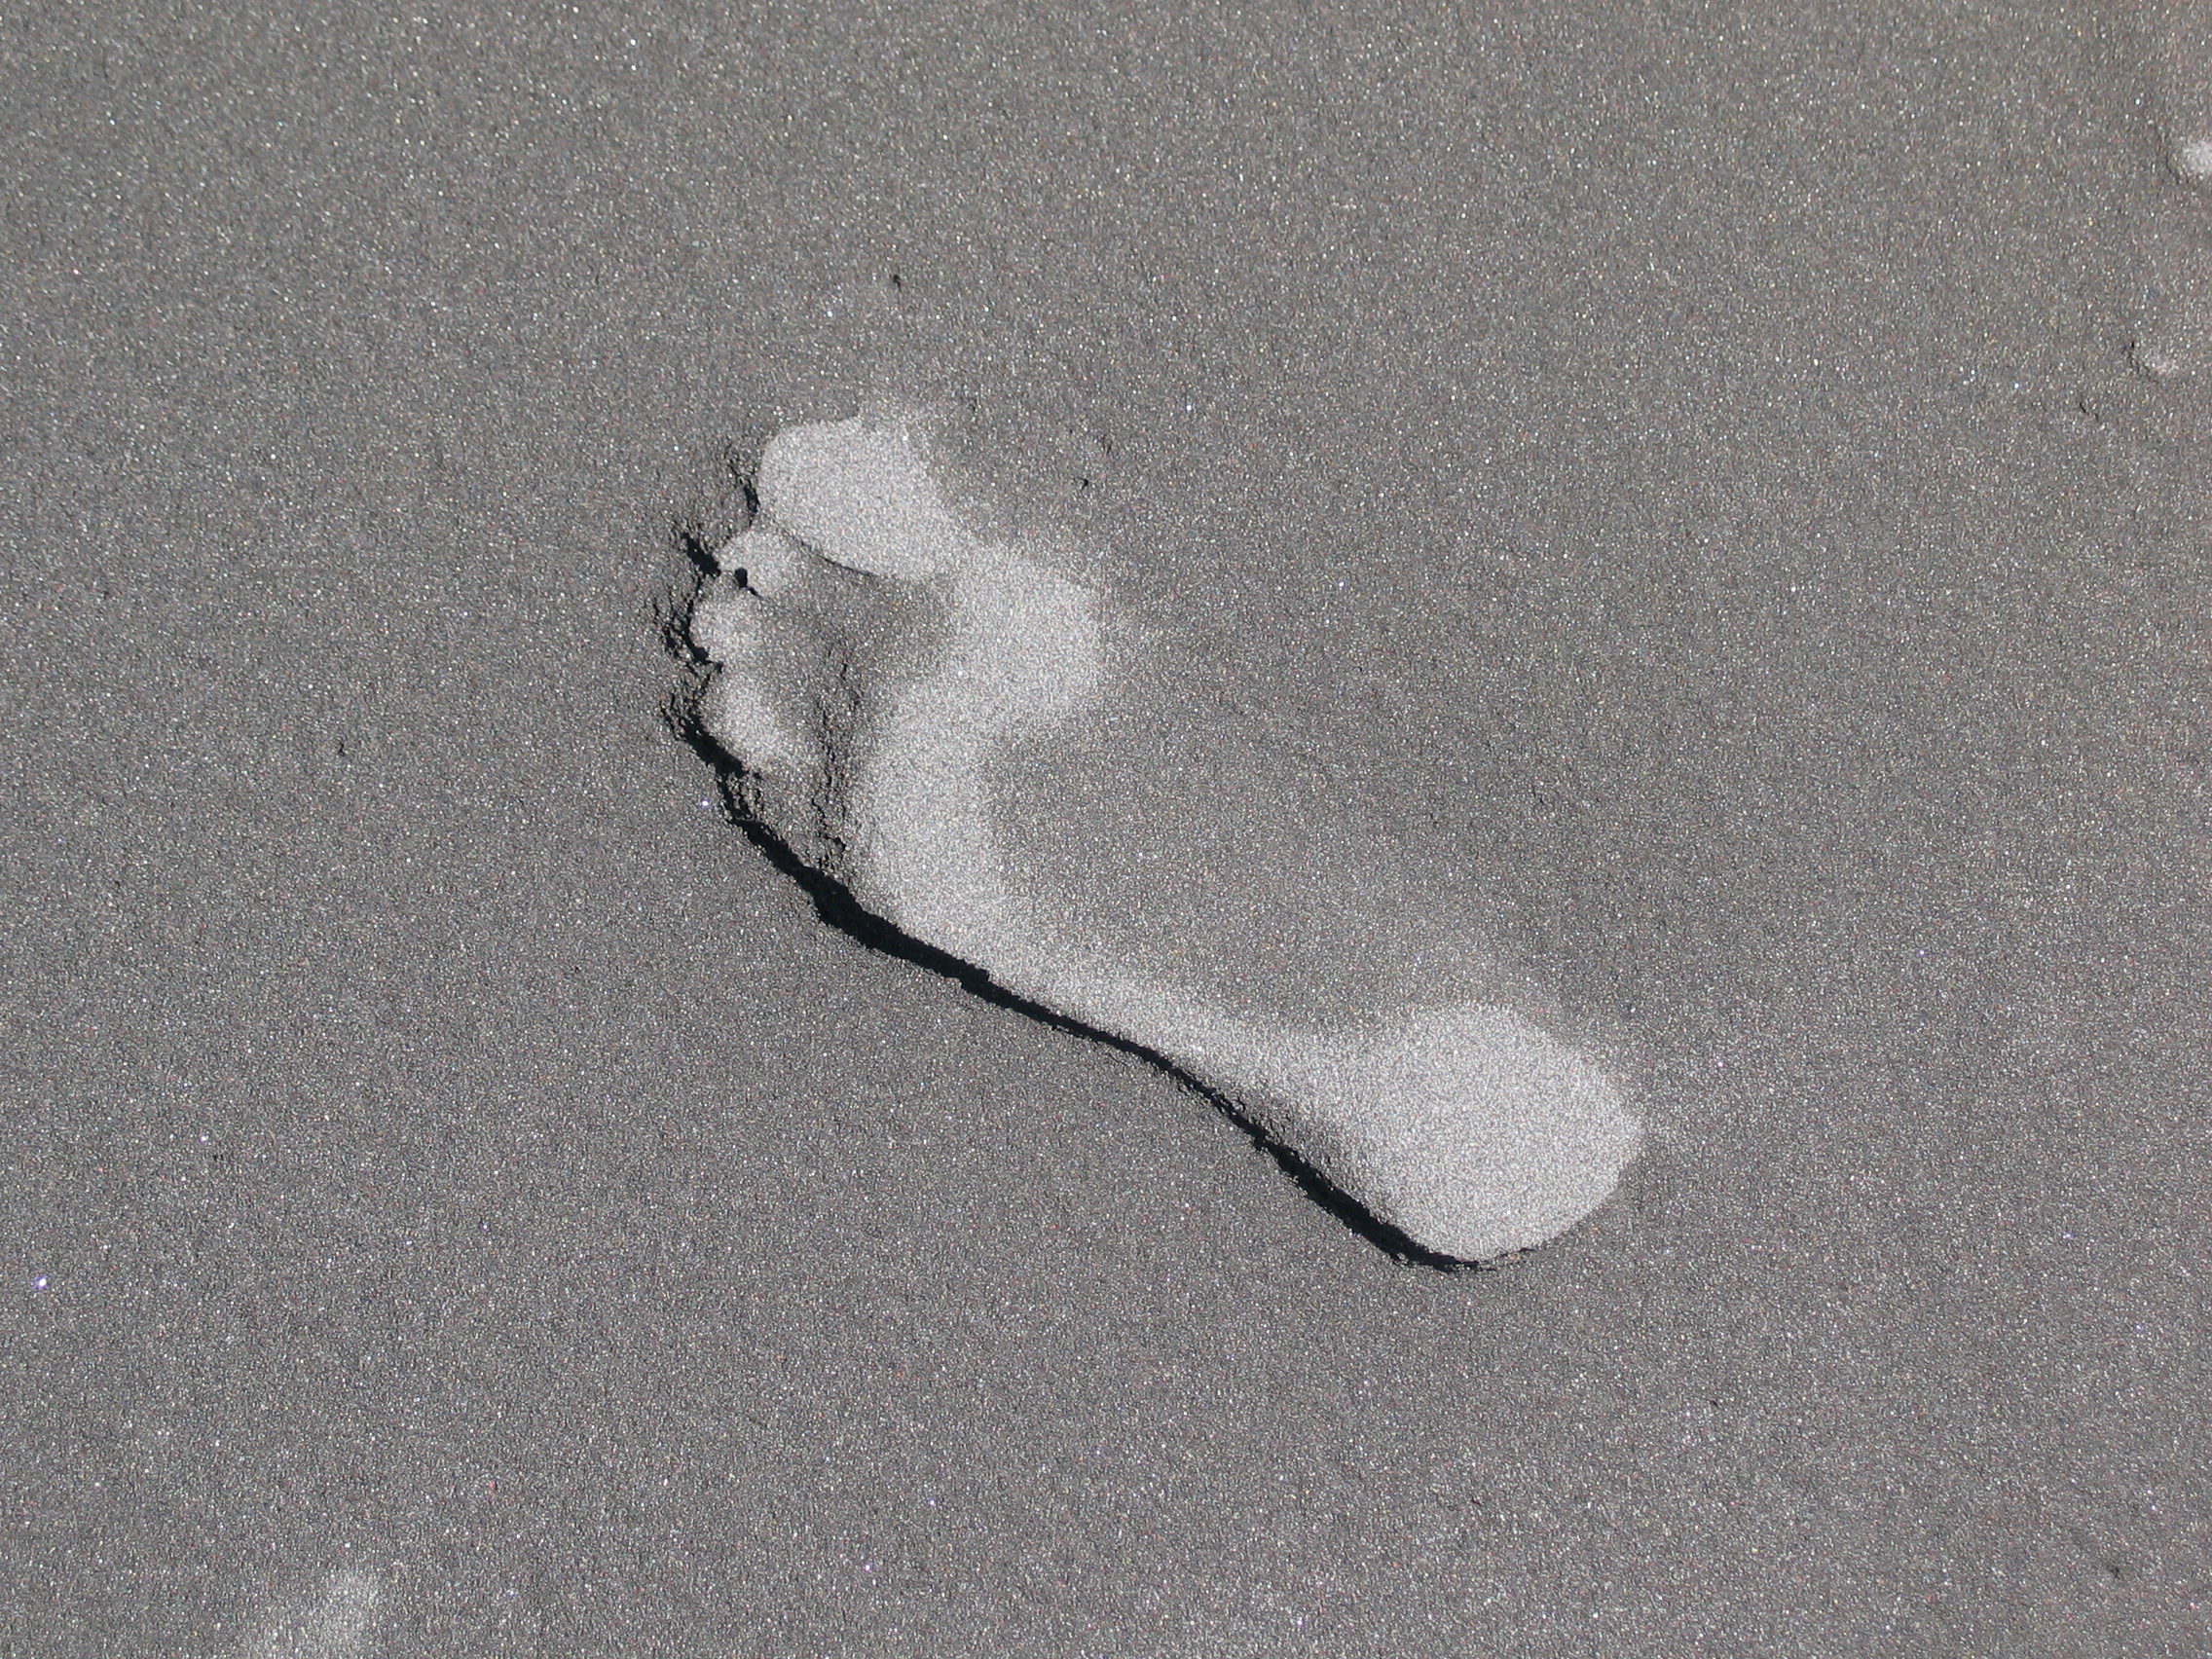 Perfect footprint